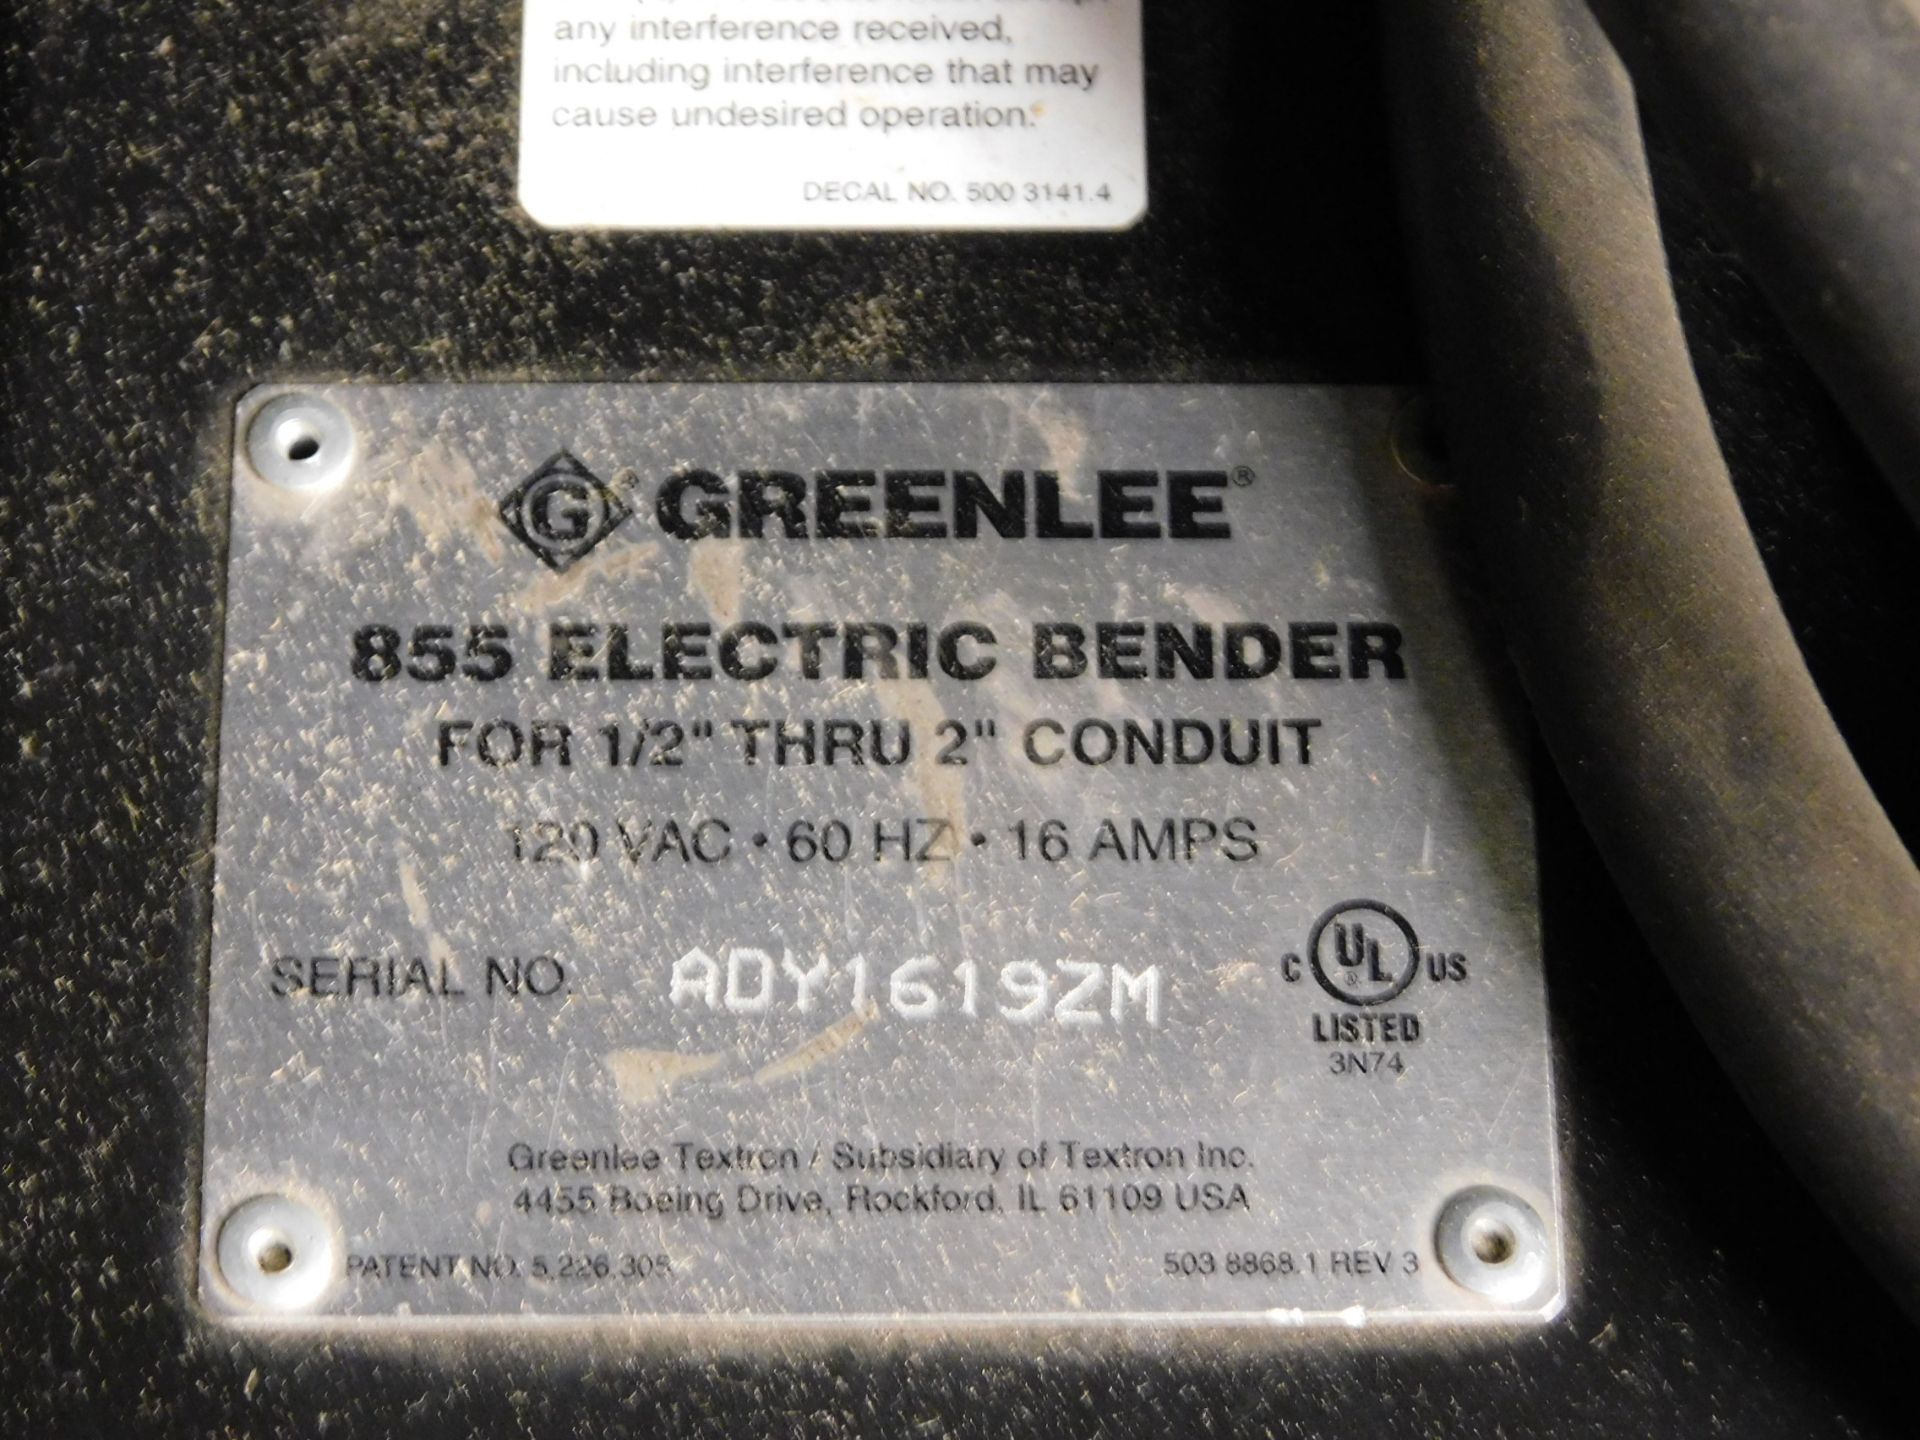 Greenlee mod. 855 Electric Bender for ½" thru 2" - Image 3 of 3